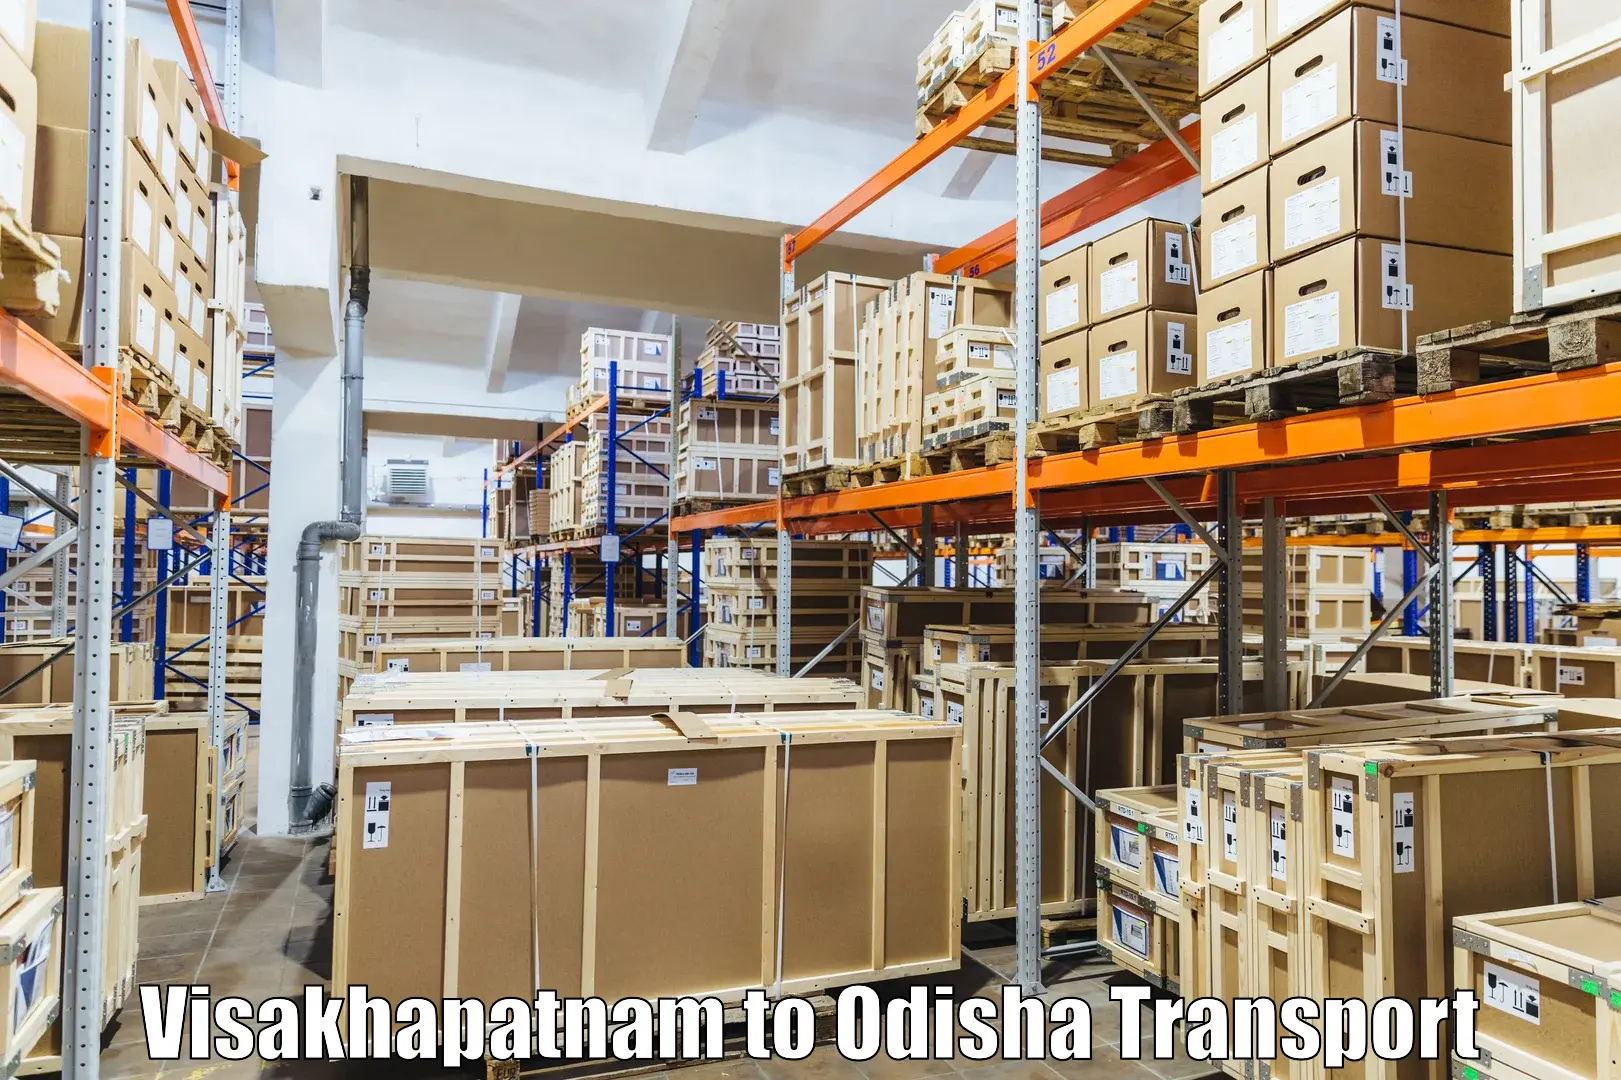 Online transport service Visakhapatnam to IIT Bhubaneshwar